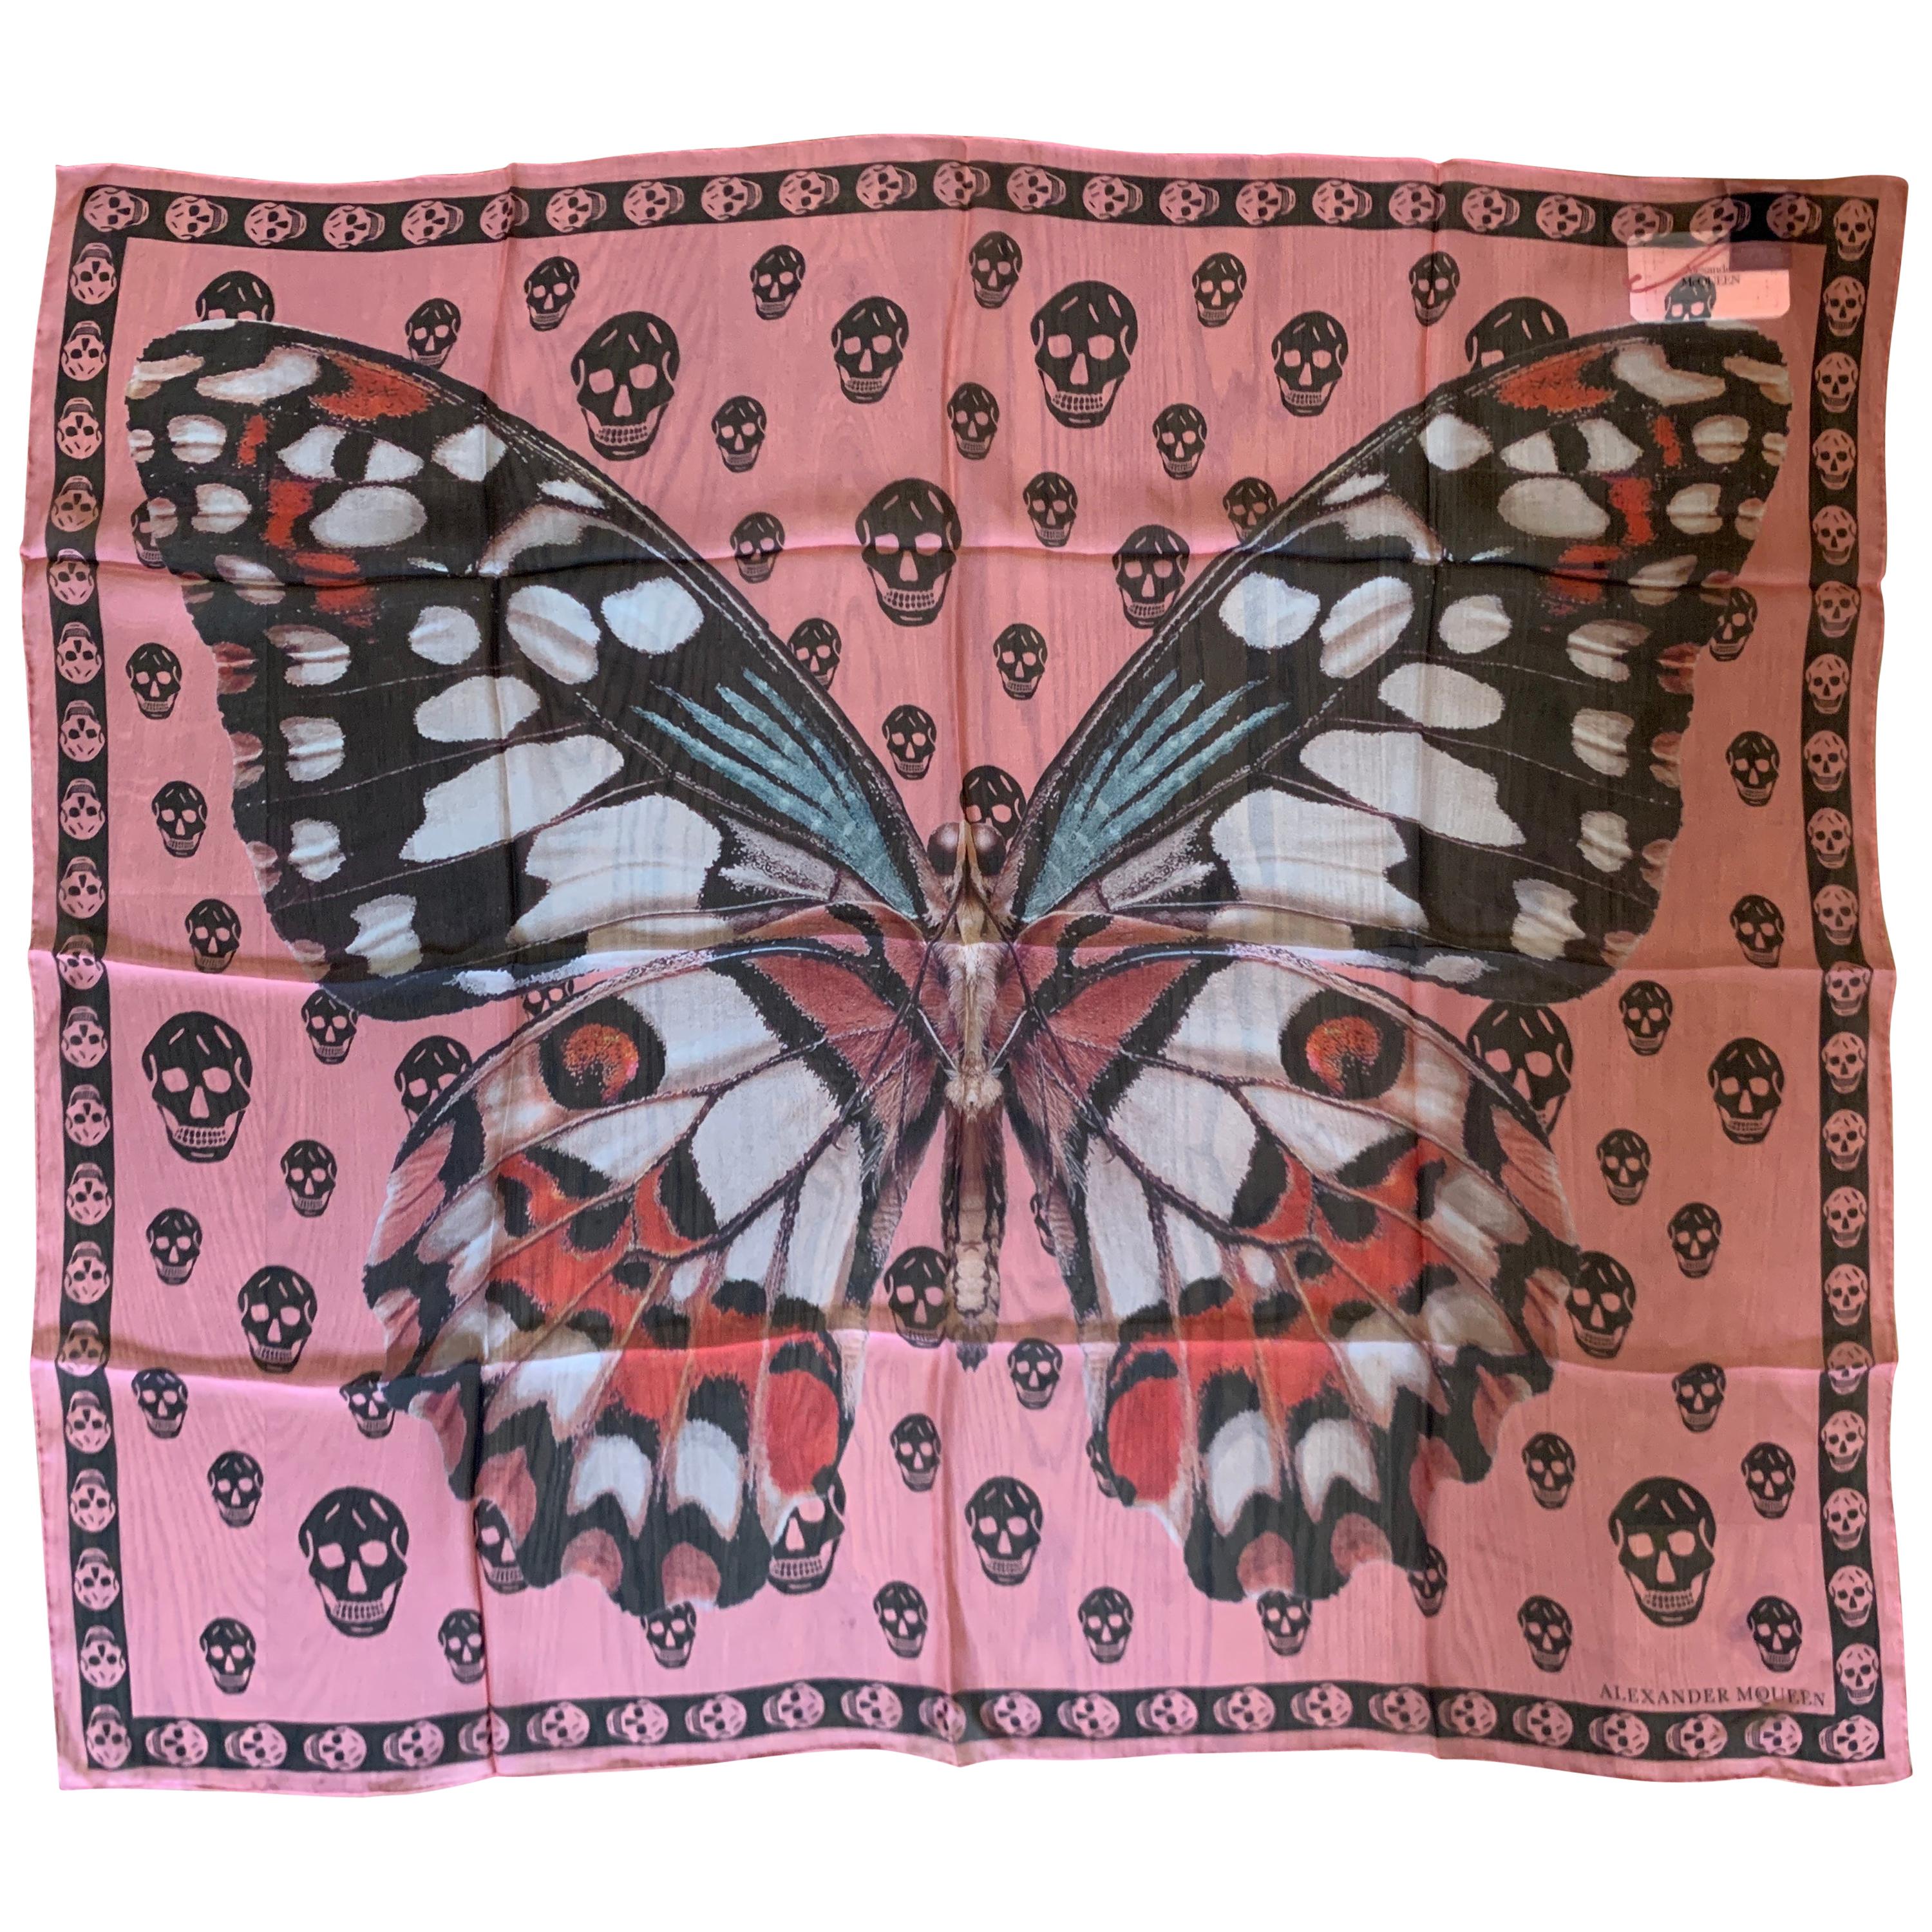 New Alexander Mcqueen Silk Butterfly and Skull Semi-Sheer Pink Scarf 